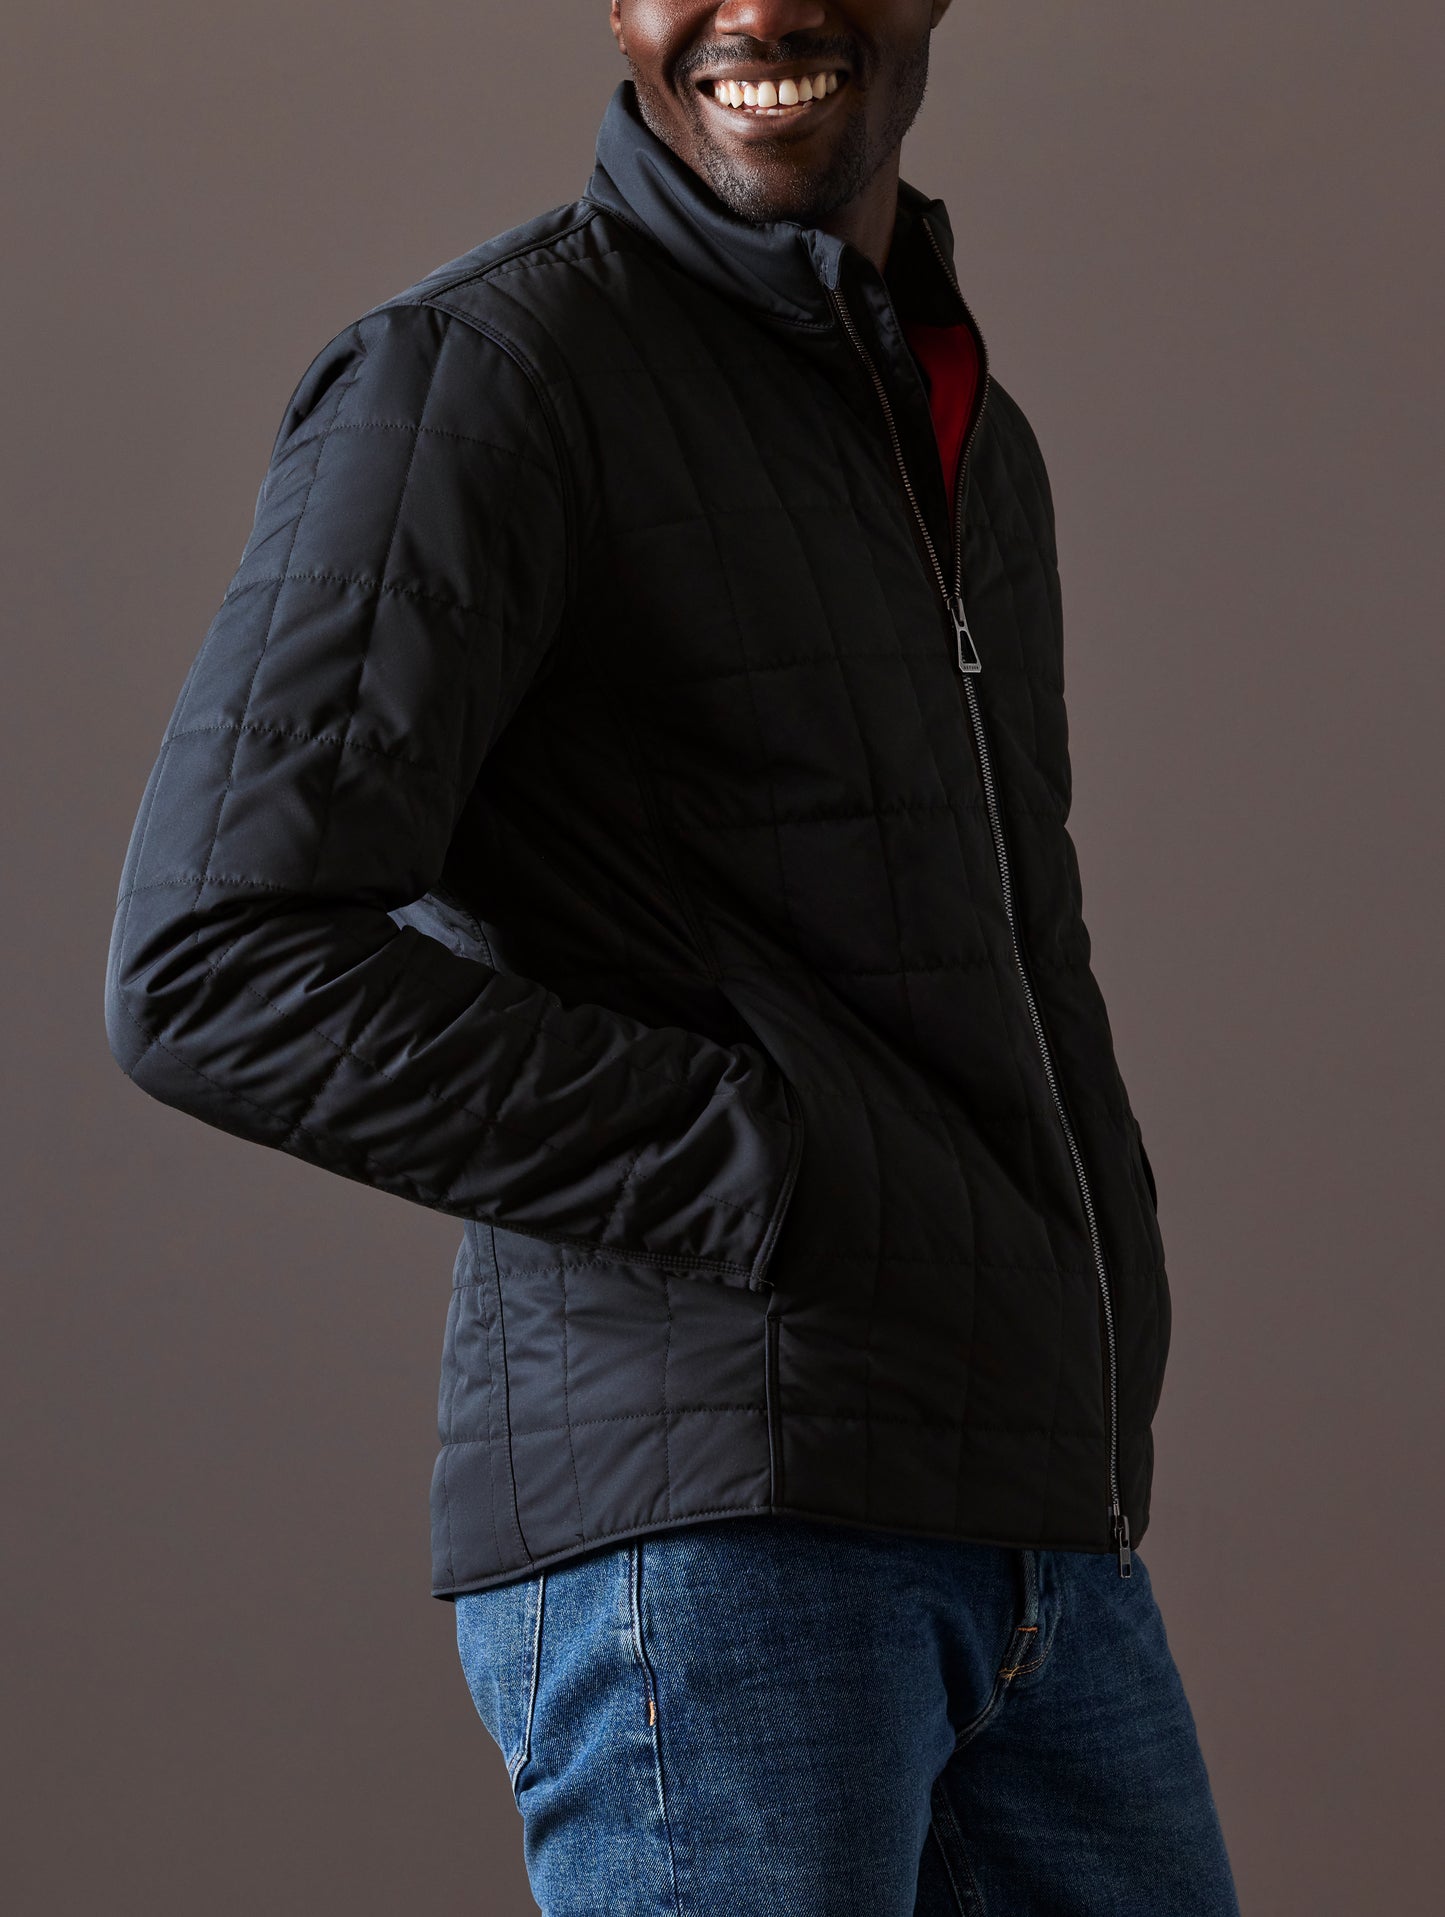 Man wearing black quilted jacket